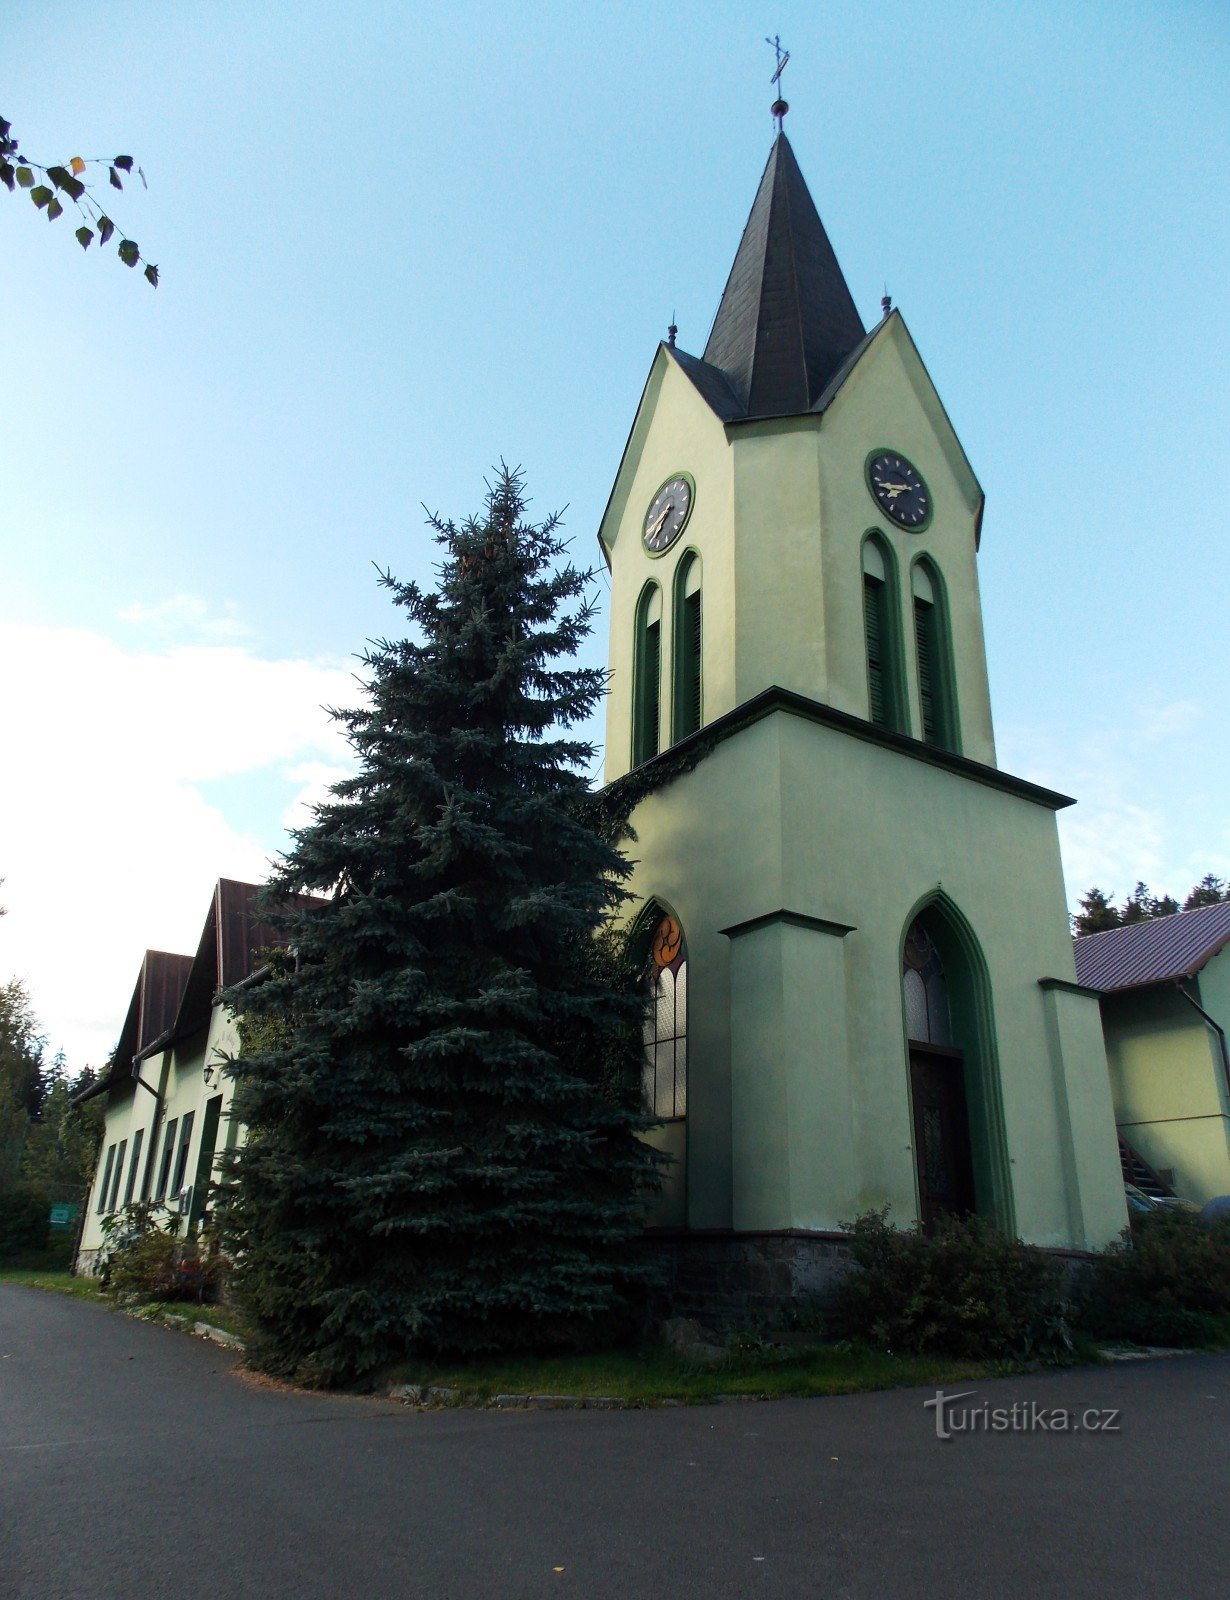 Nová Pláńの村にあるPension U Jelena